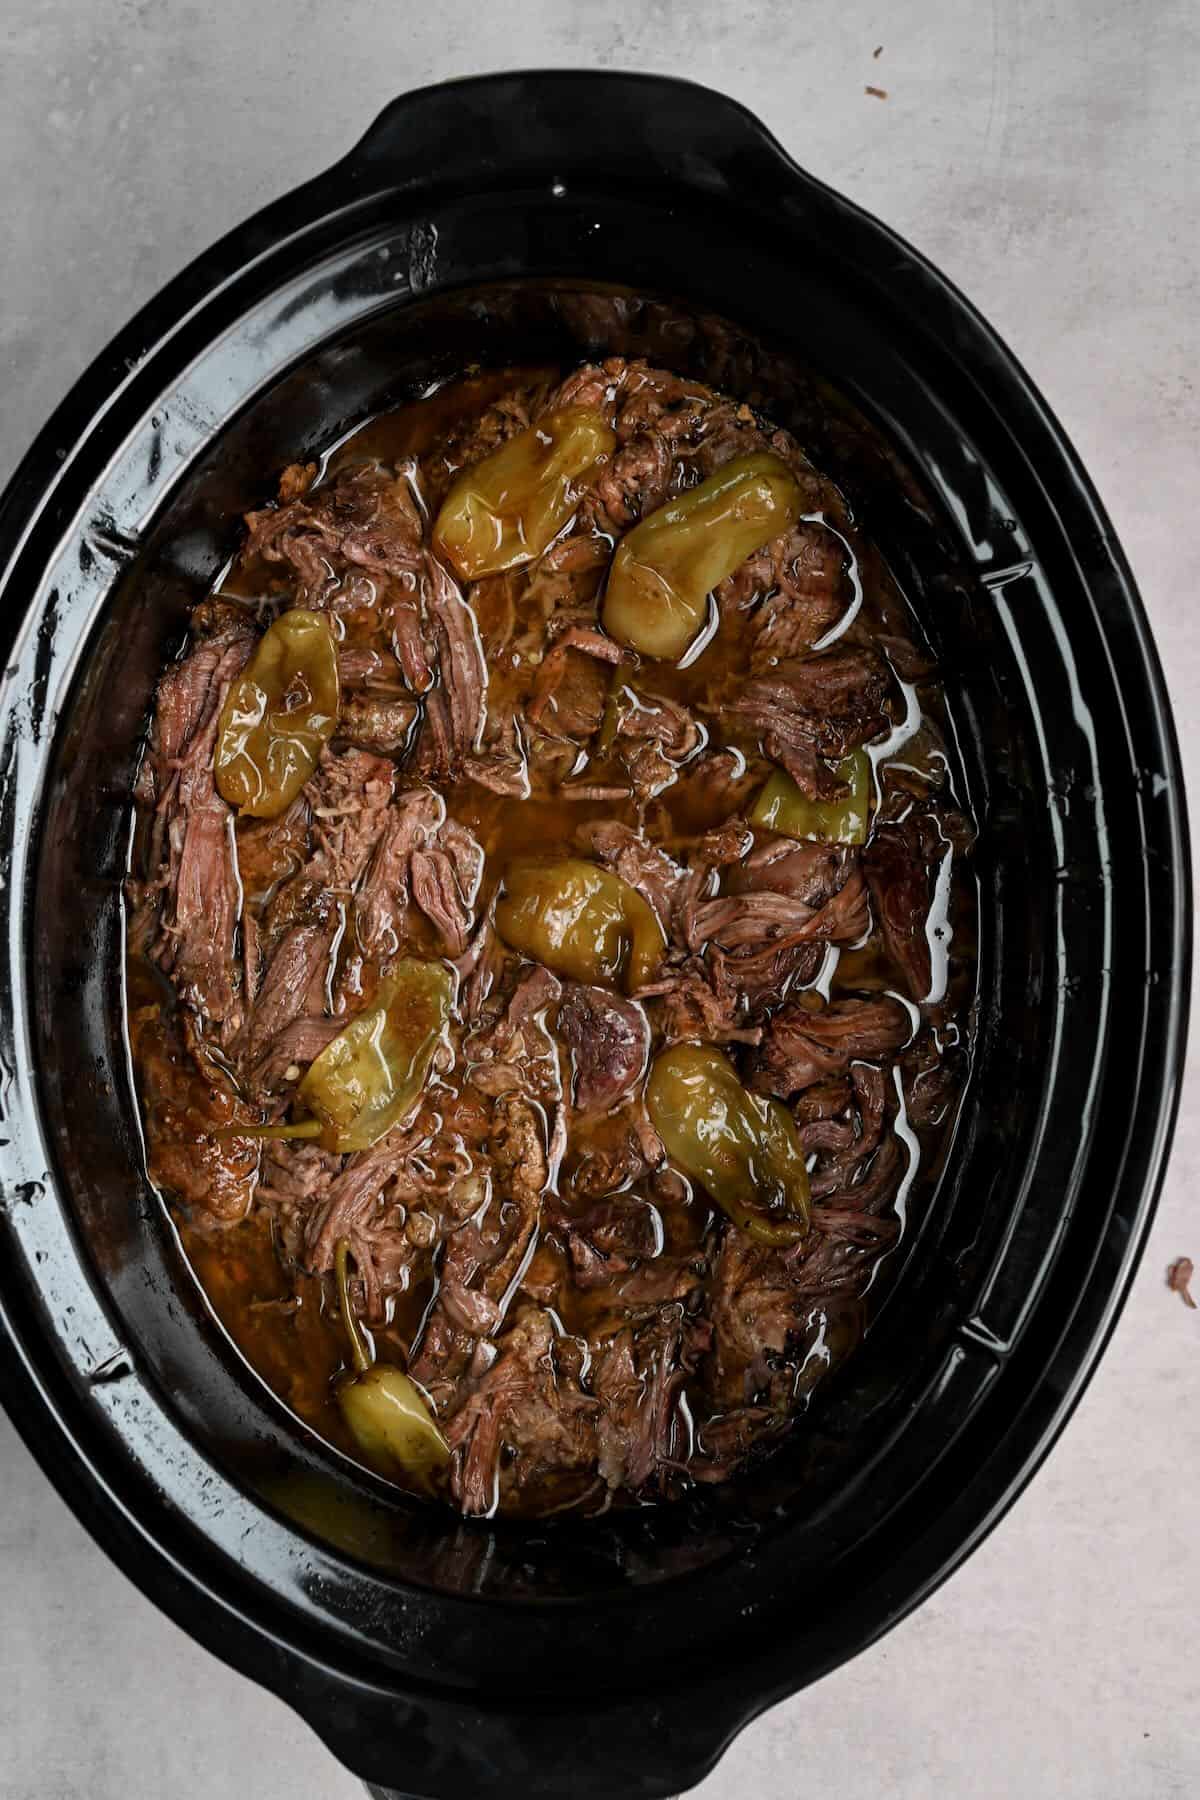 Mississippi pot roast inside a crockpot